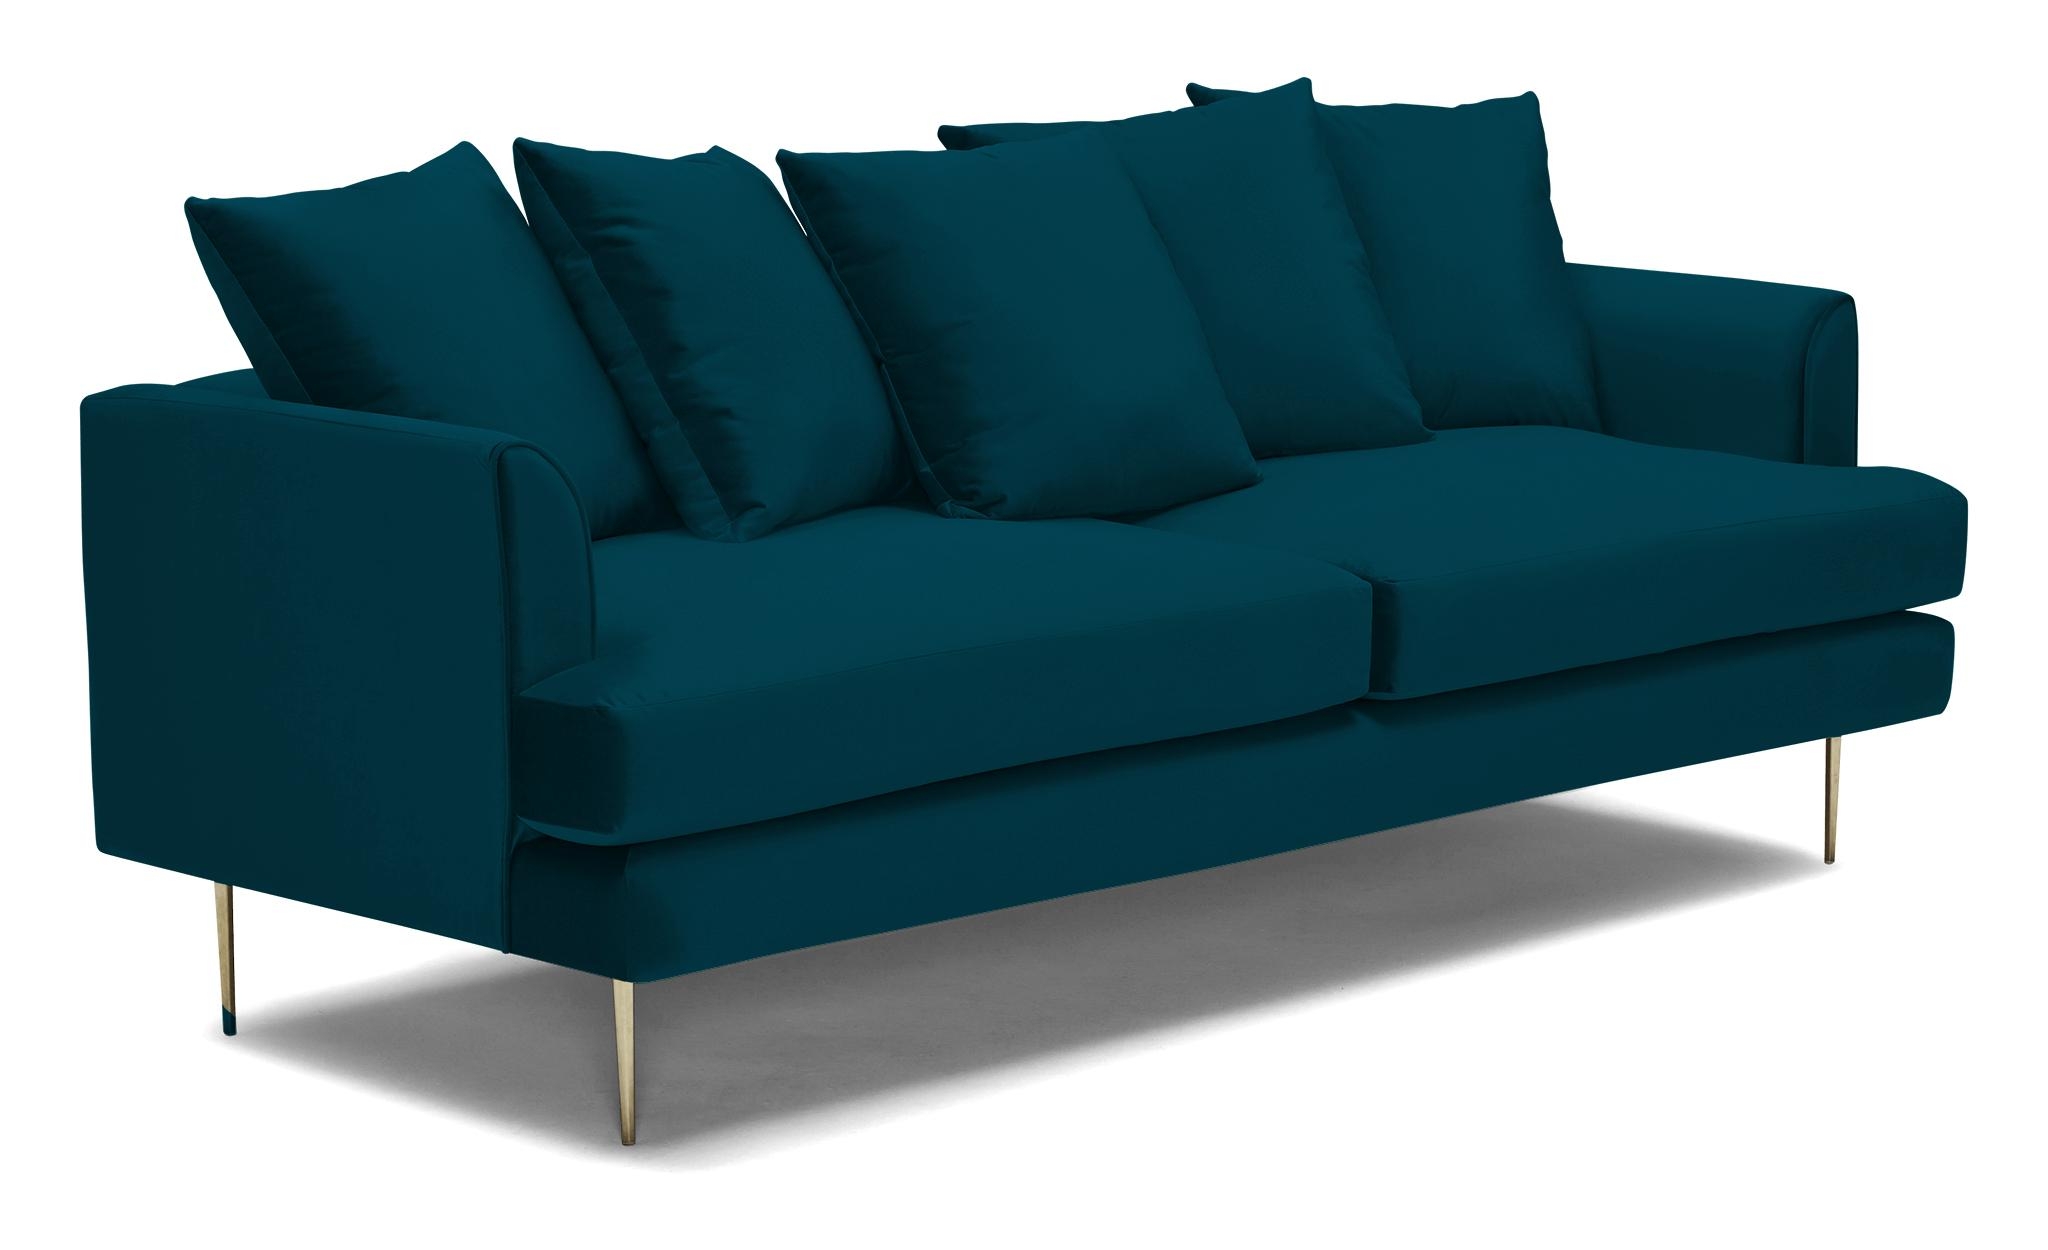 Blue Aime Mid Century Modern Sofa - Key Largo Zenith Teal - Image 1